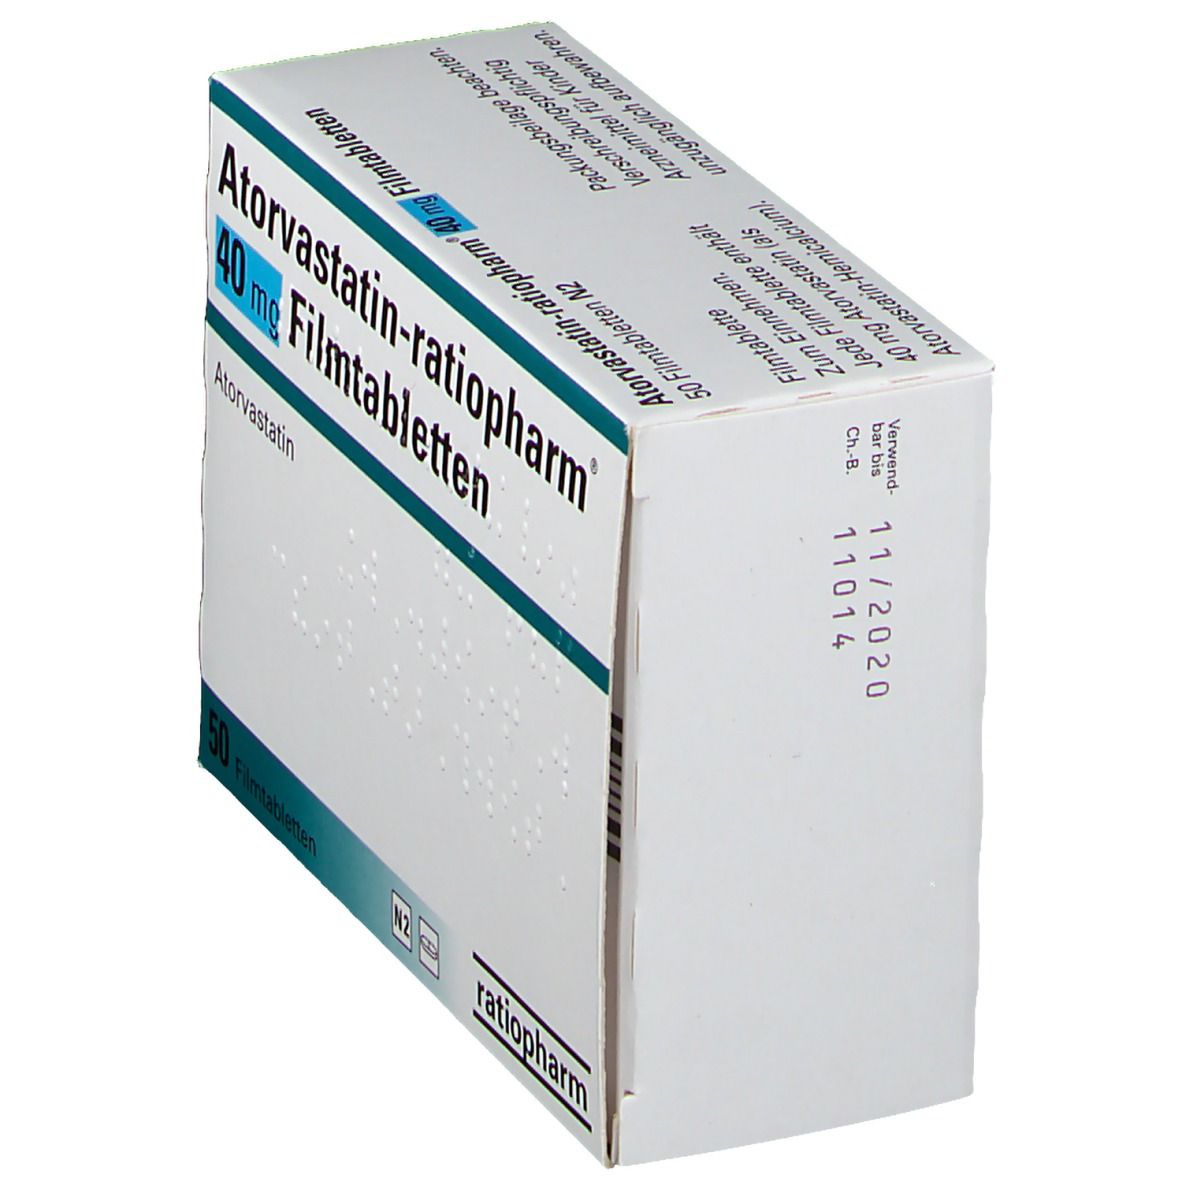 Atorvastatin-ratiopharm® 40 mg